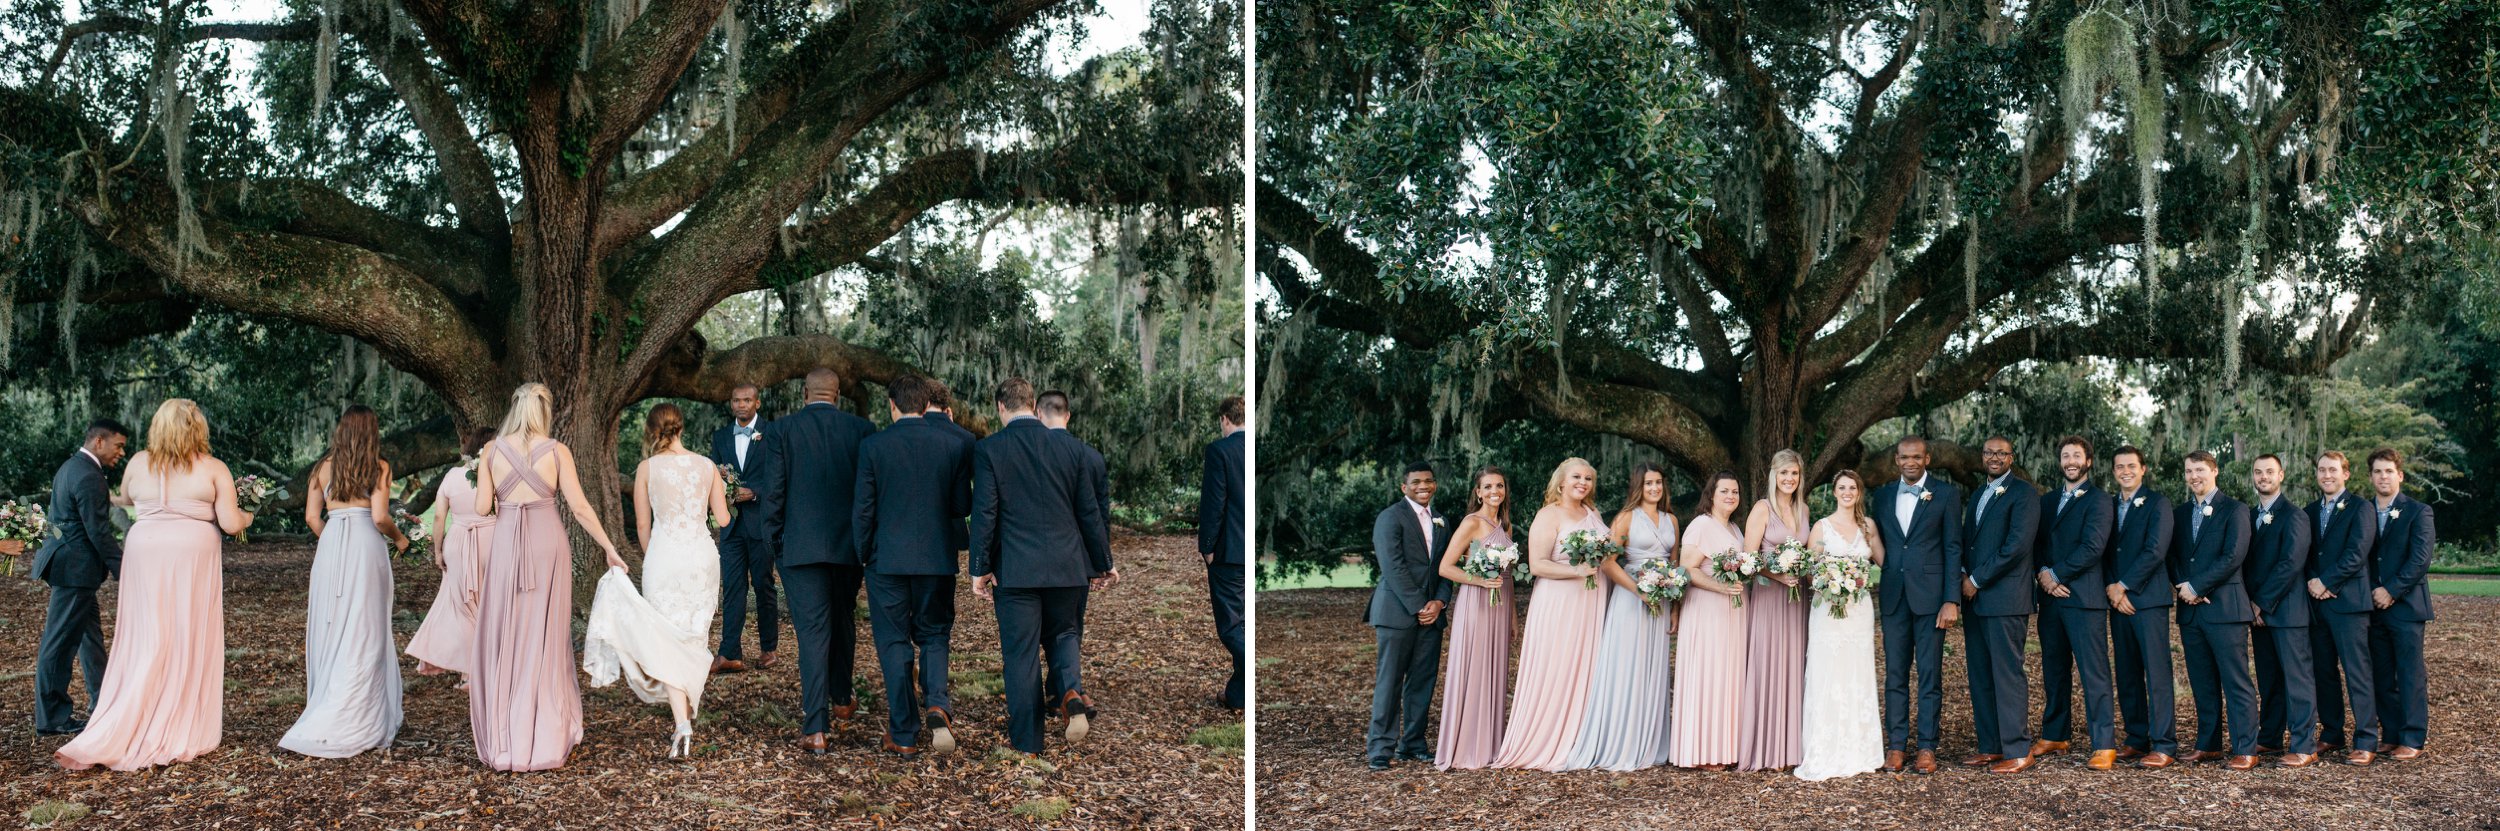 Charleston-wedding-photographer_0022.jpg